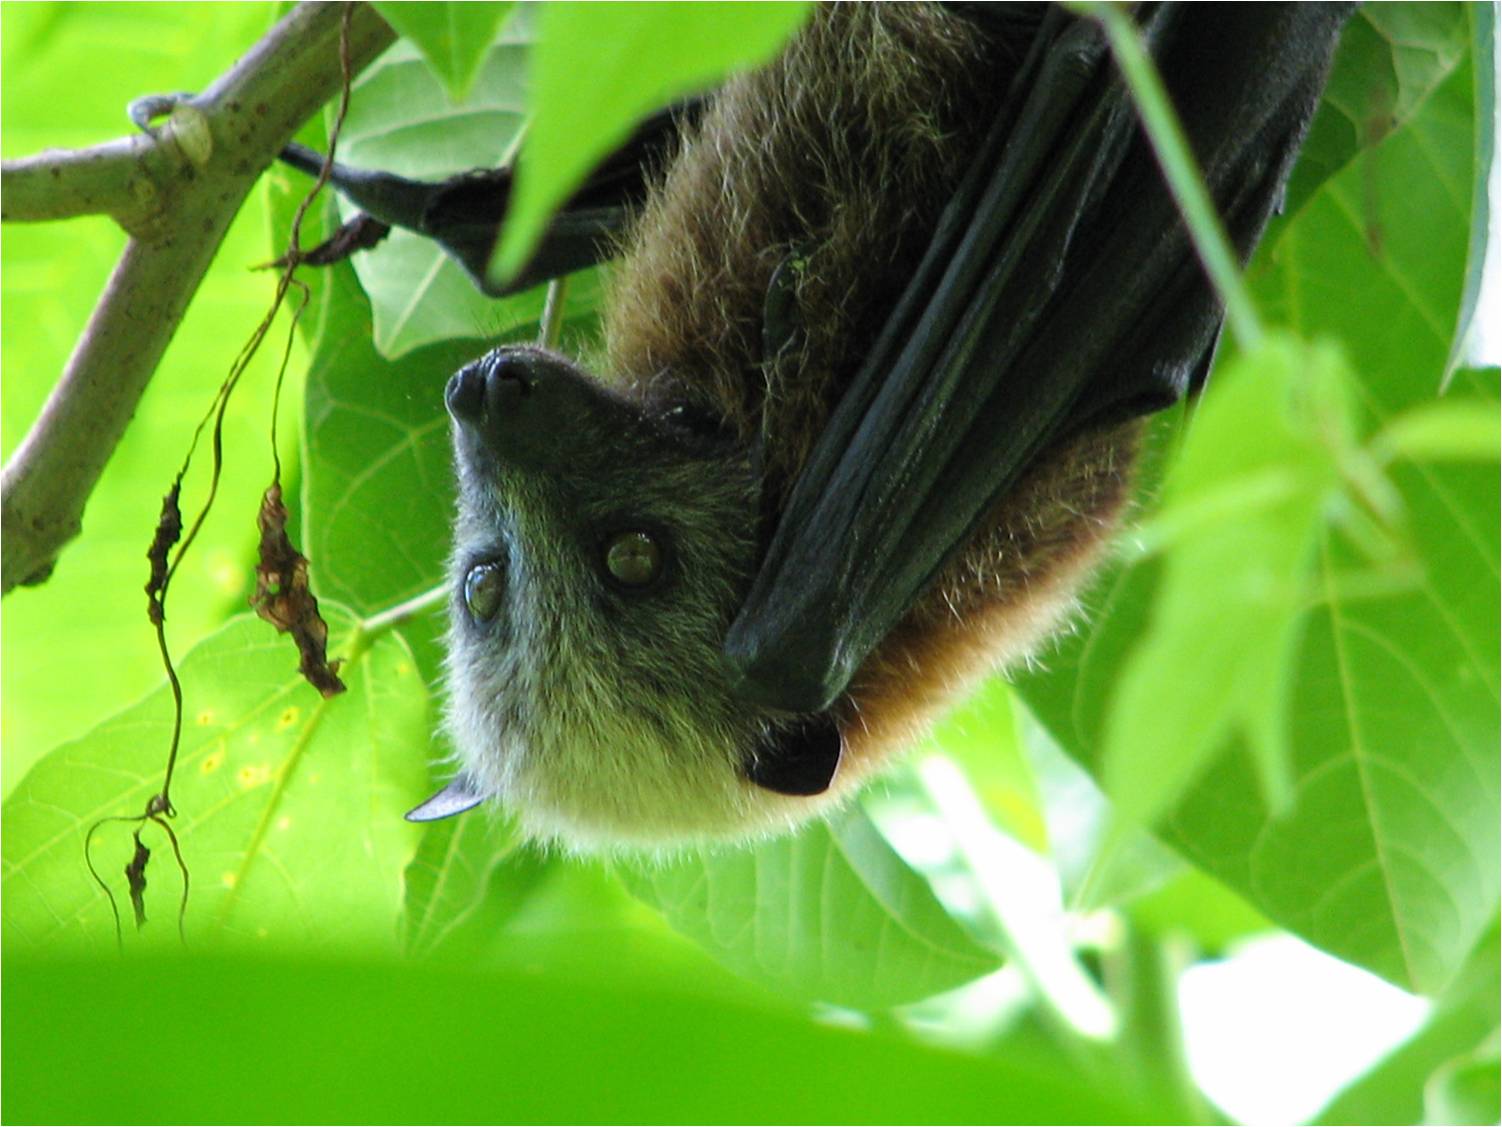 Samoan Fruit Bat 1 - National Park Service of American Samoa.jpg